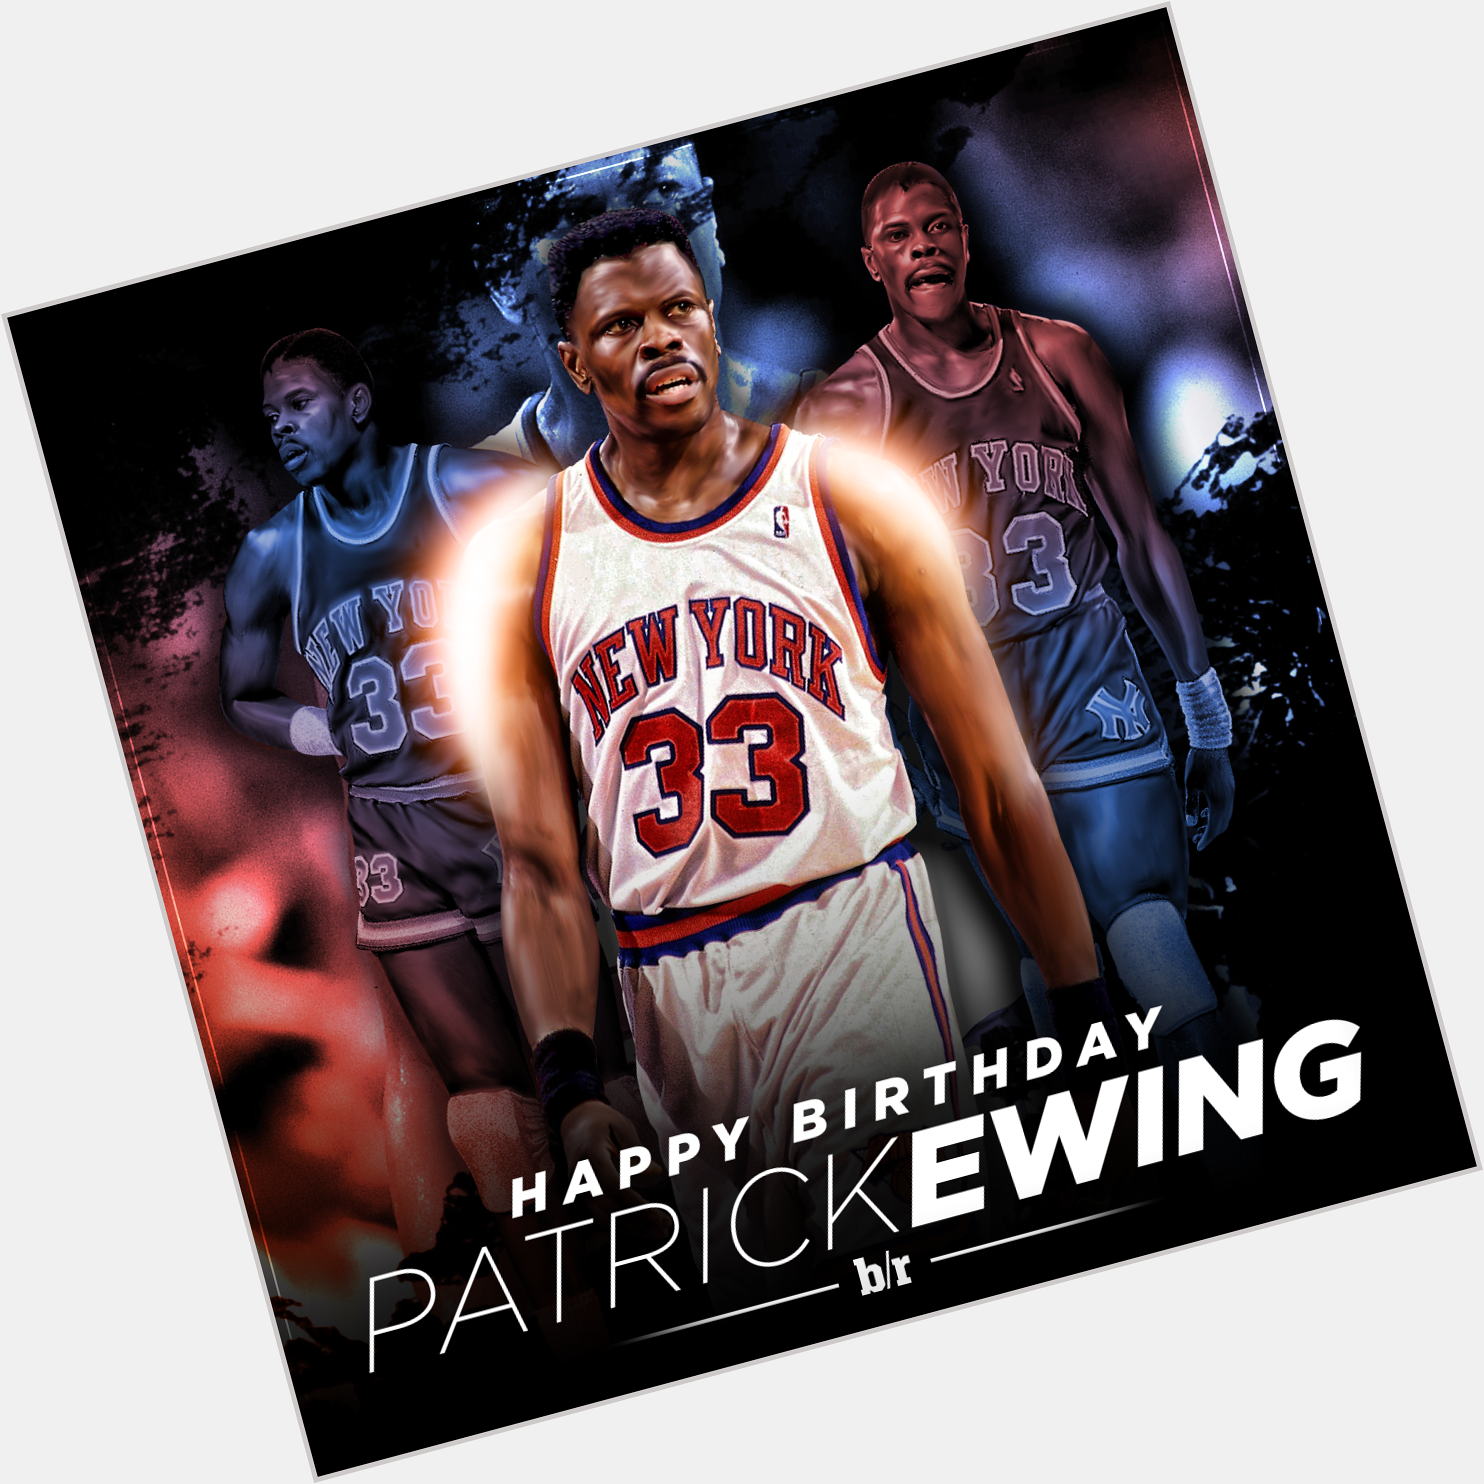 Happy birthday to legend Patrick Ewing! 